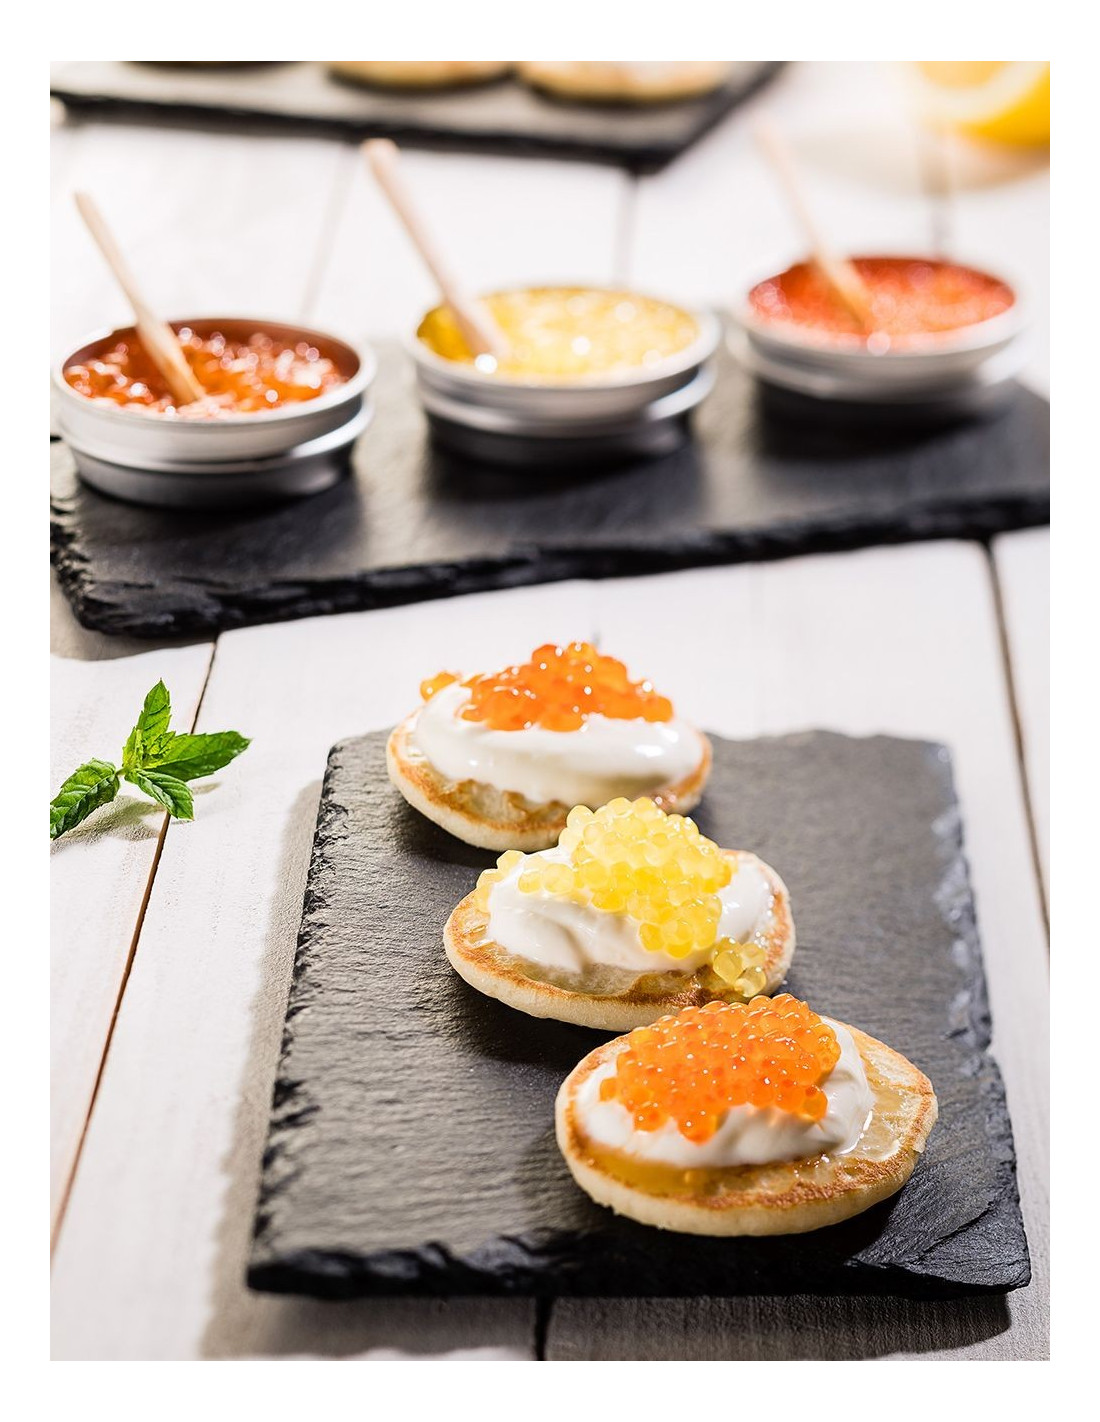 Oeufs de saumon de fontaine bio - L'Épicerie Neuvic - Caviar de Neuvic